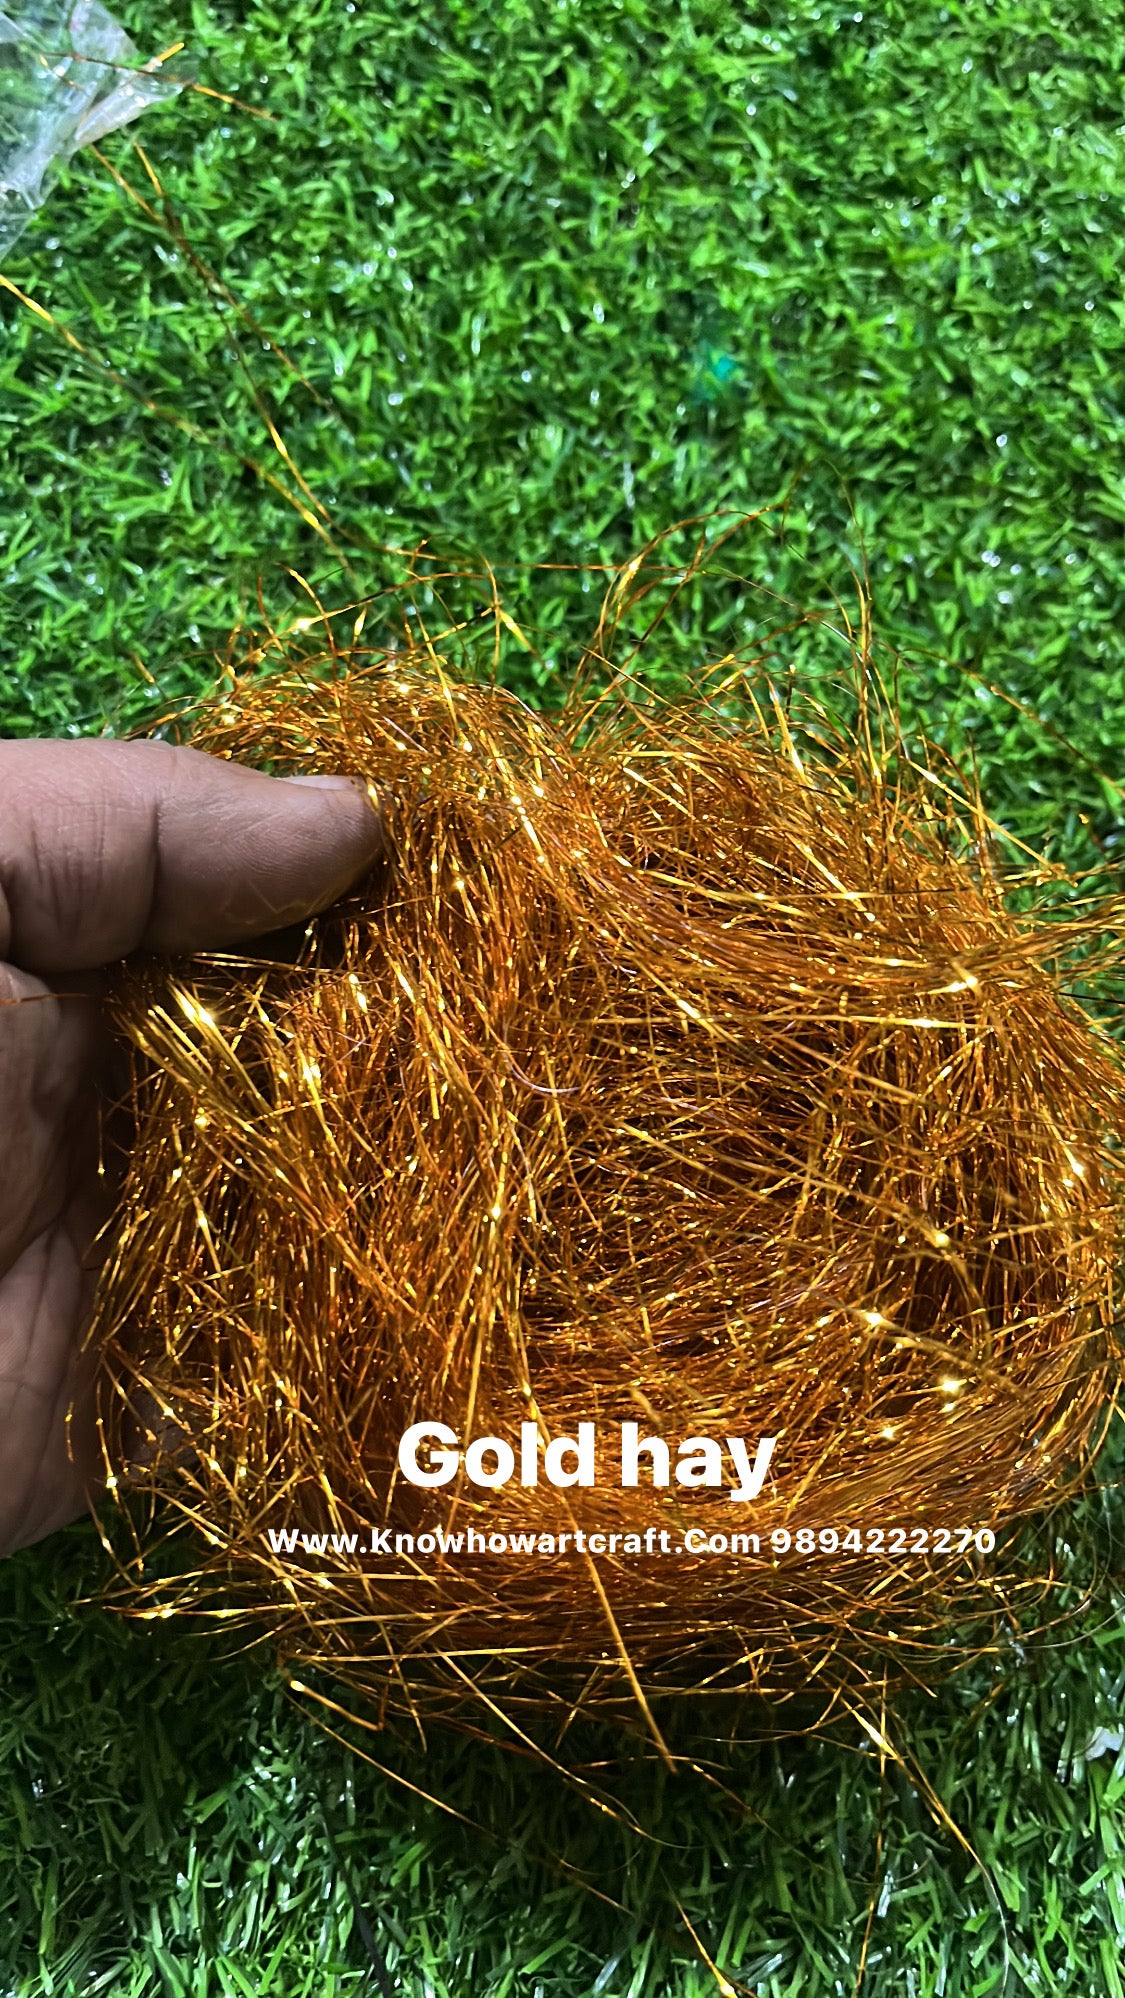 Gold hay